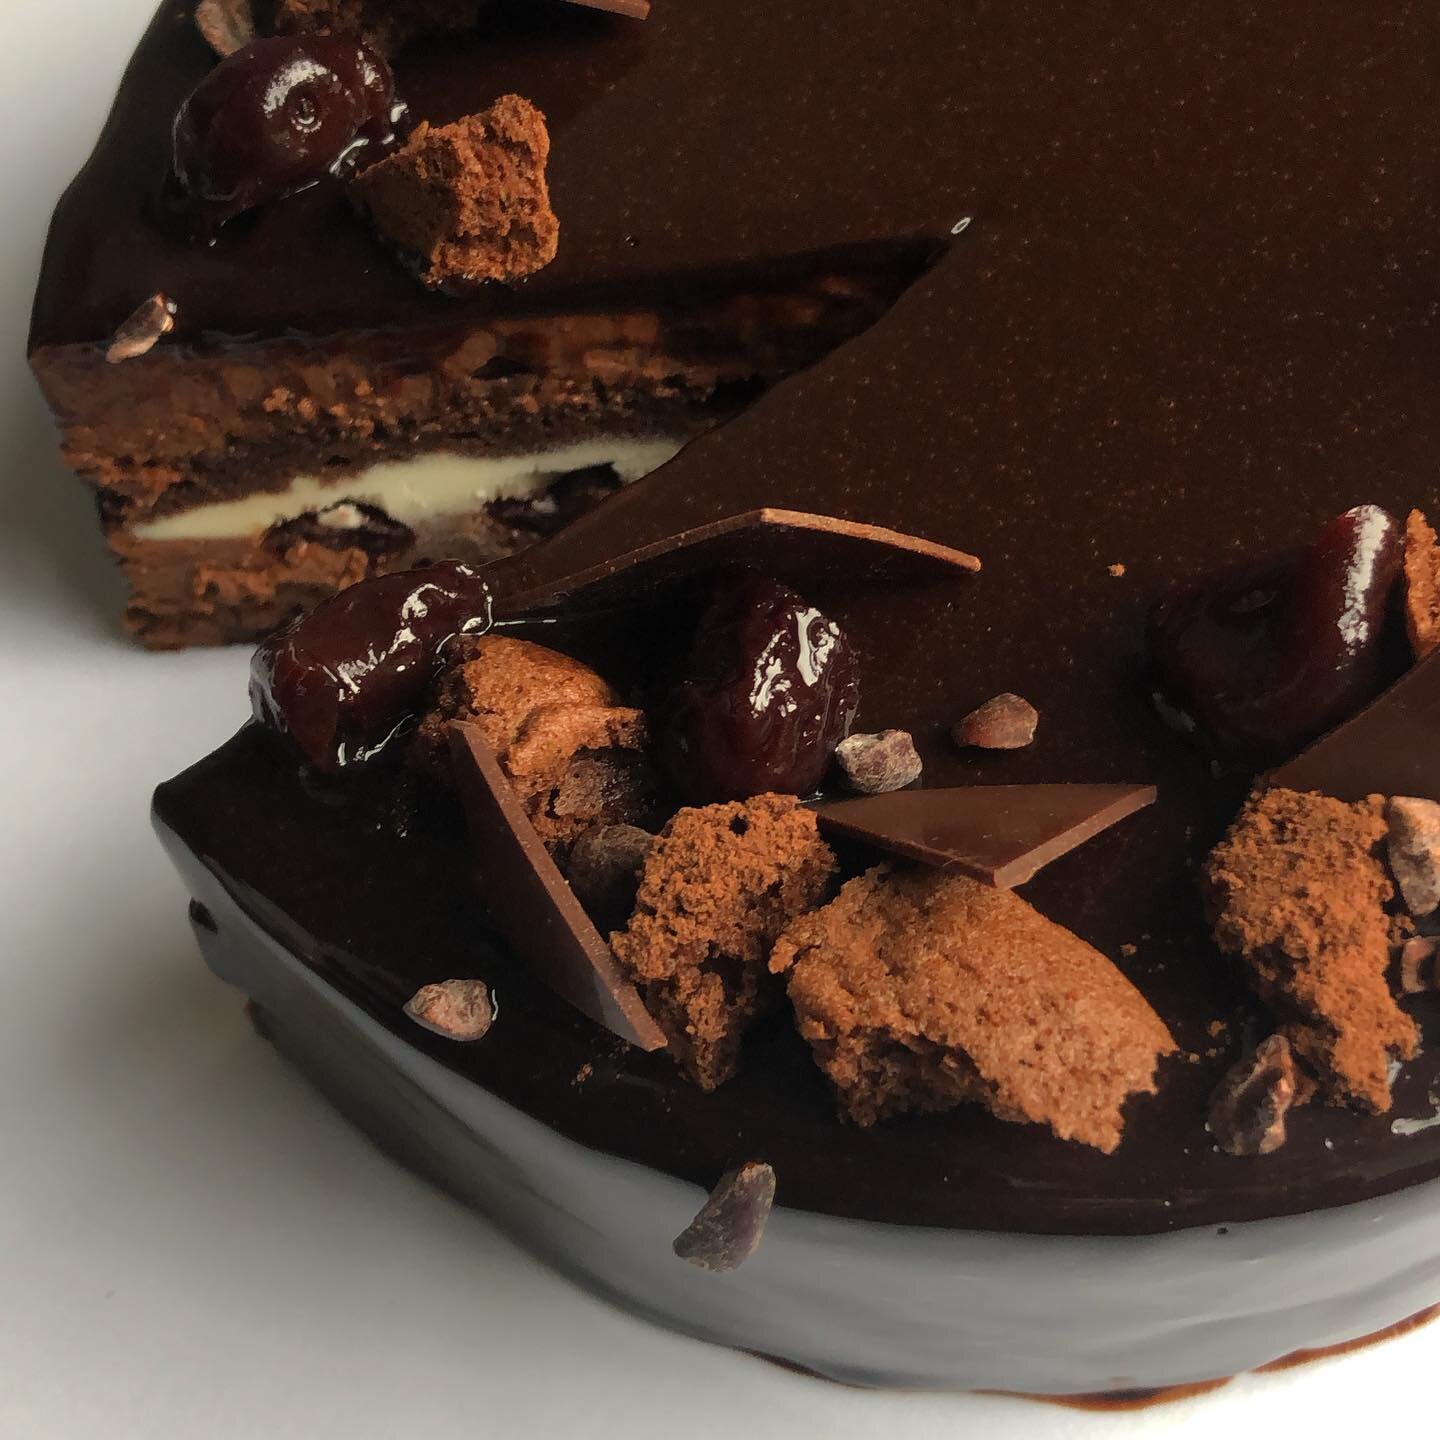 Chocolate &amp; 🍒 for December only.
#shutishuti #patisserie #chocolatecake #gateauchocolat #chocolatemousse #madetoordercakes #yorkcakes